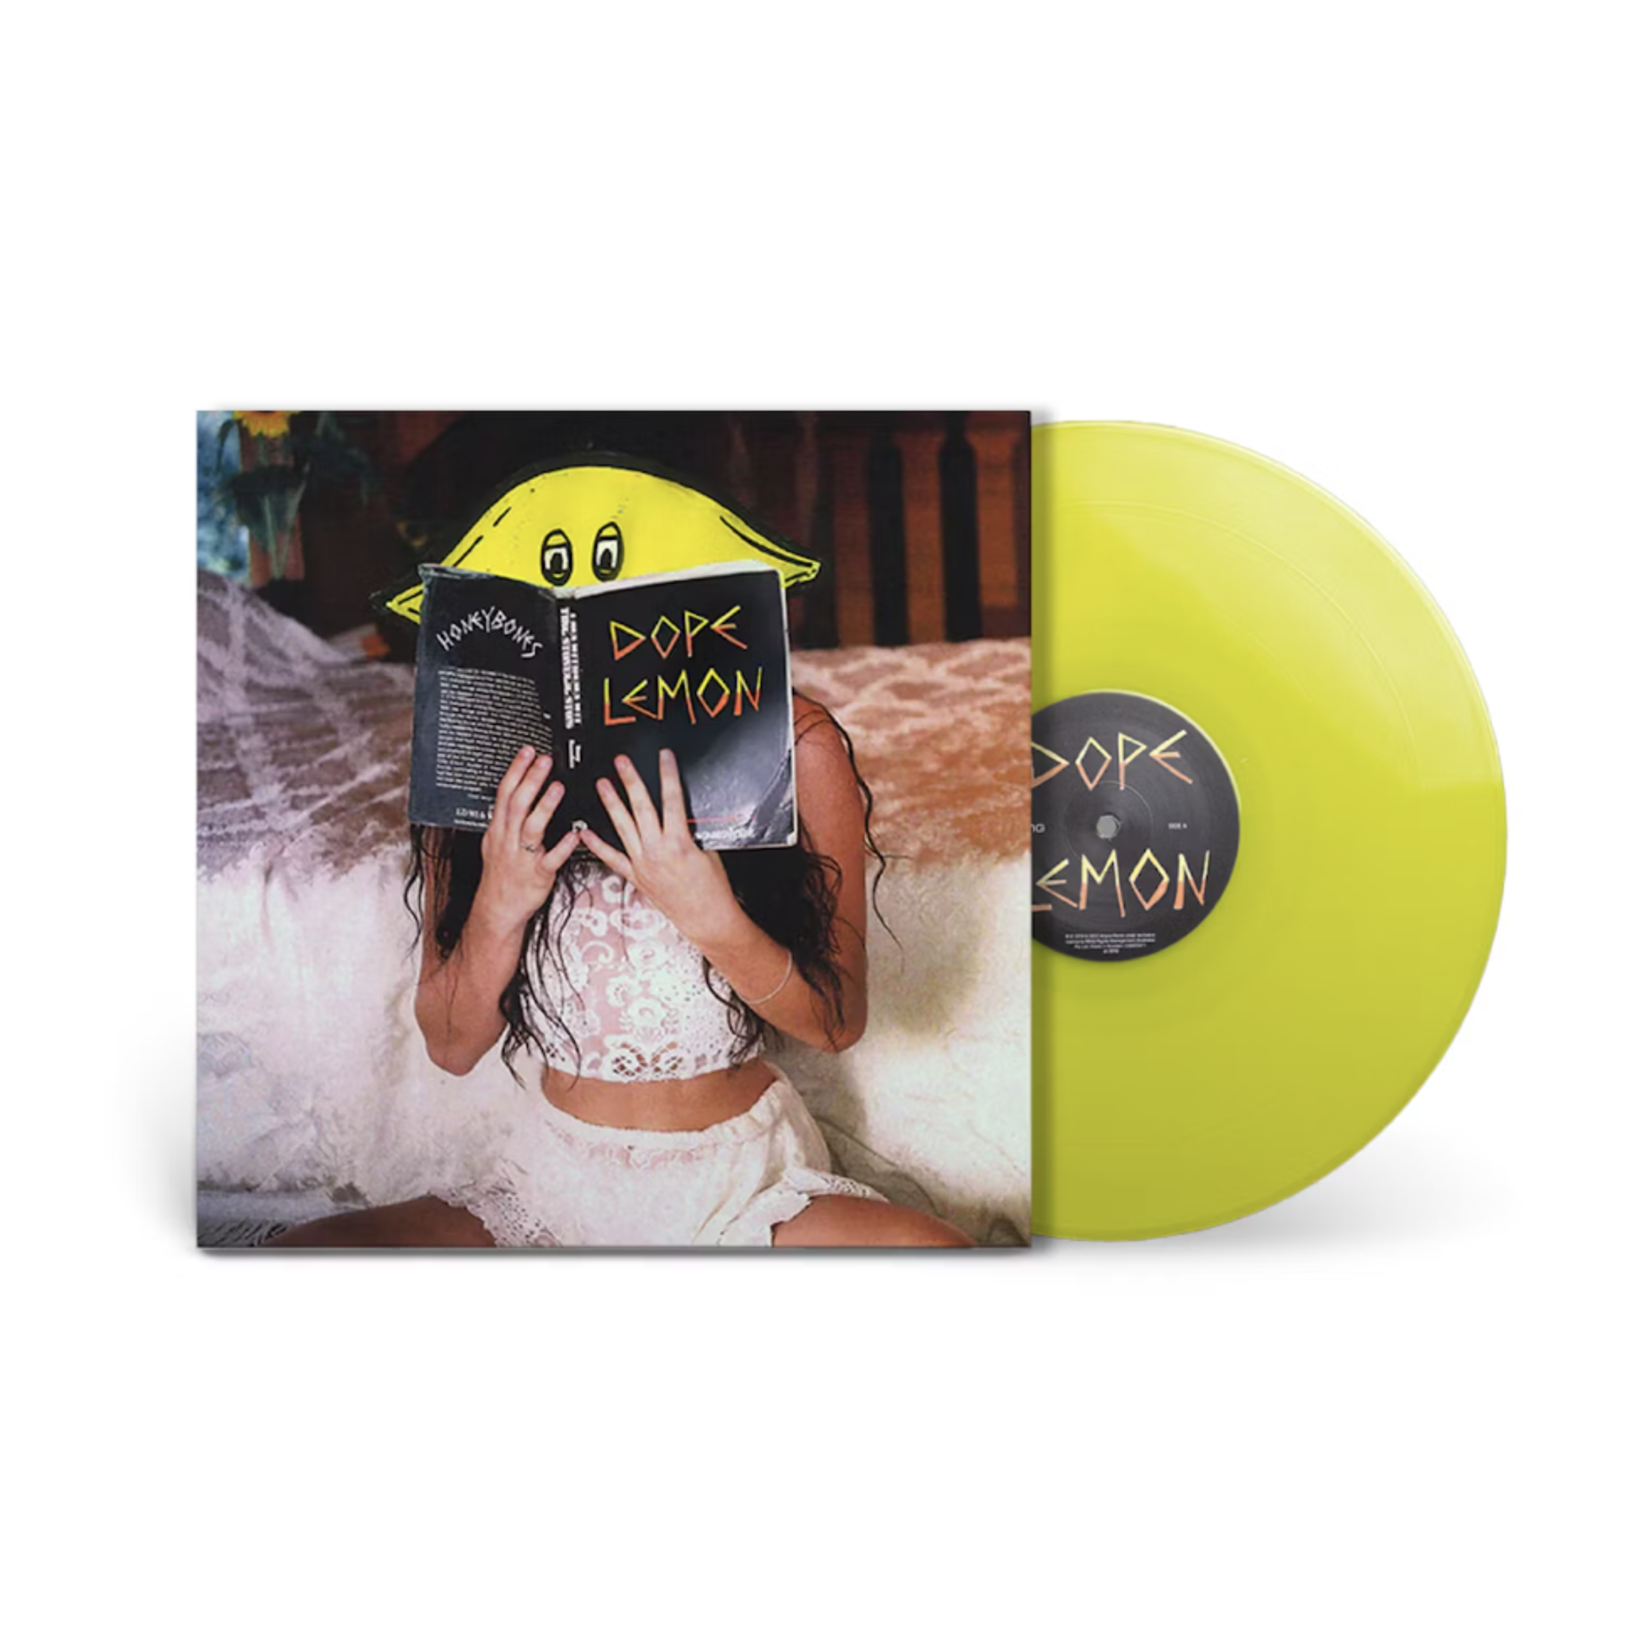 [New] Dope Lemon - Honey Bones (2LP, transparent yellow vinyl)